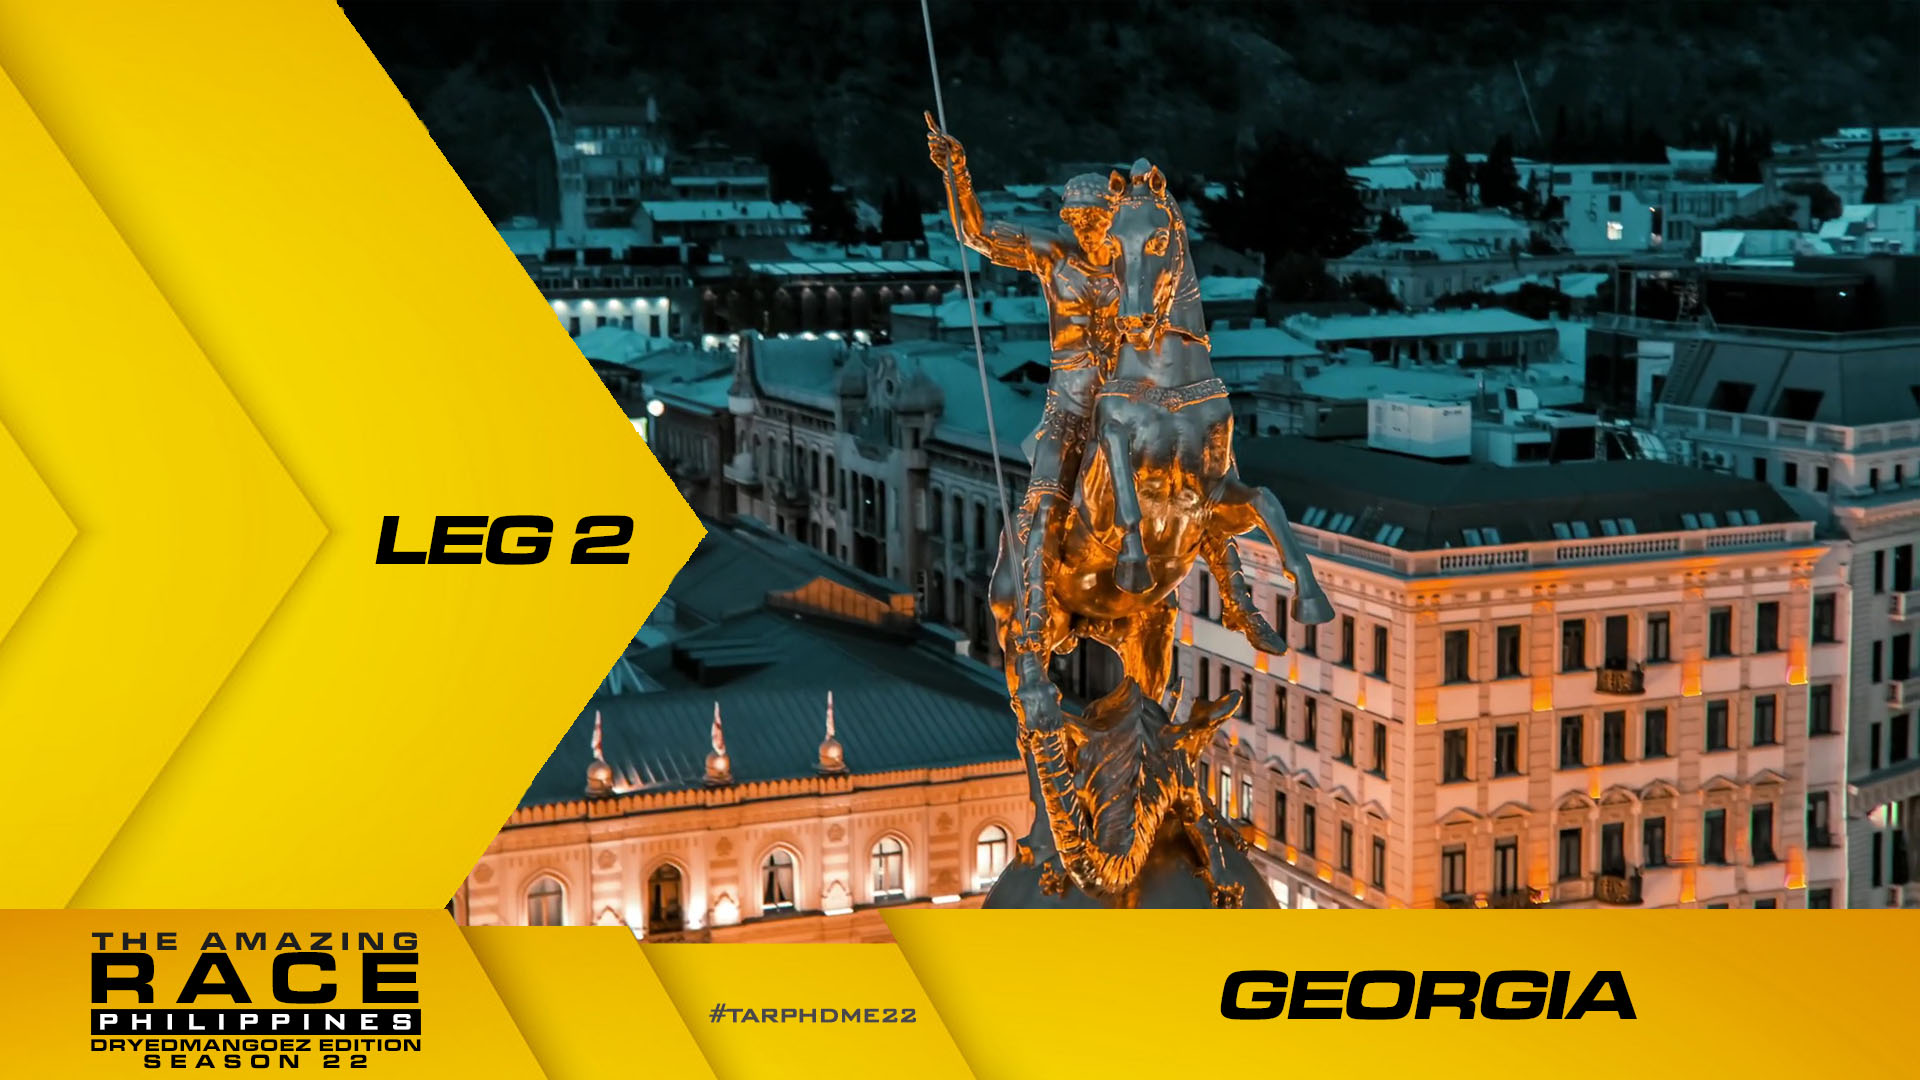 The Amazing Race Philippines: DryedMangoez Edition Season 22, Leg 2 – Georgia